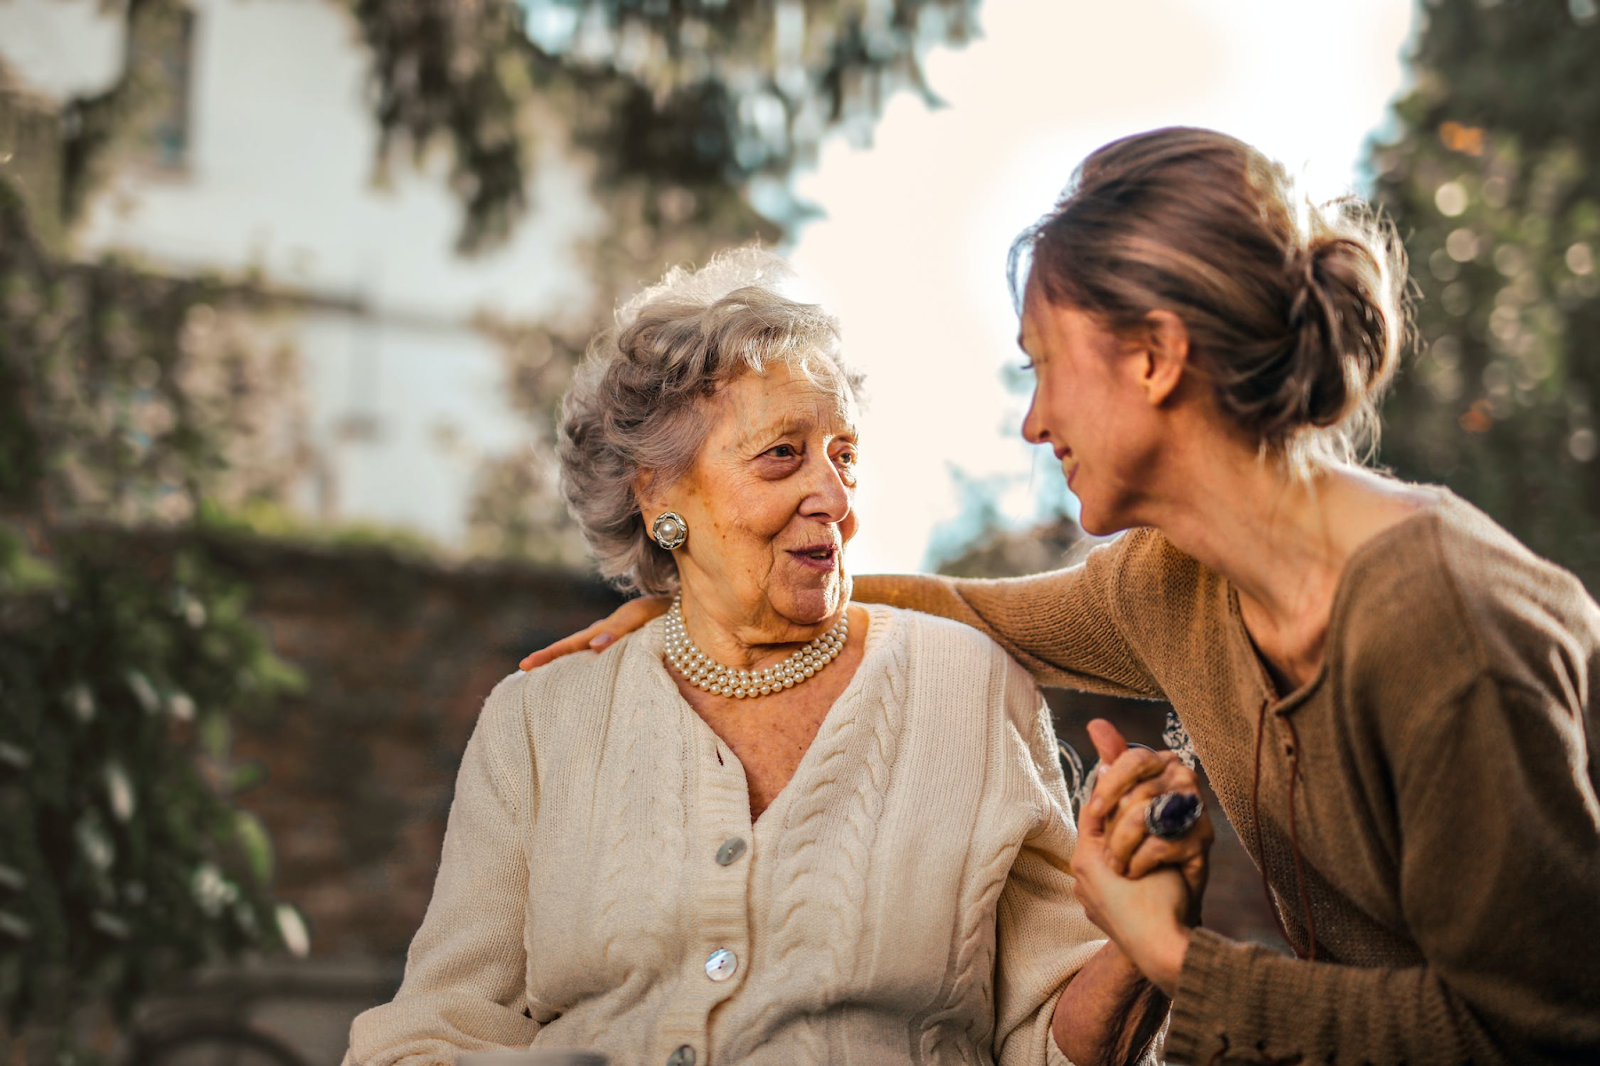 Joyful greeting between a senior and her caregiver